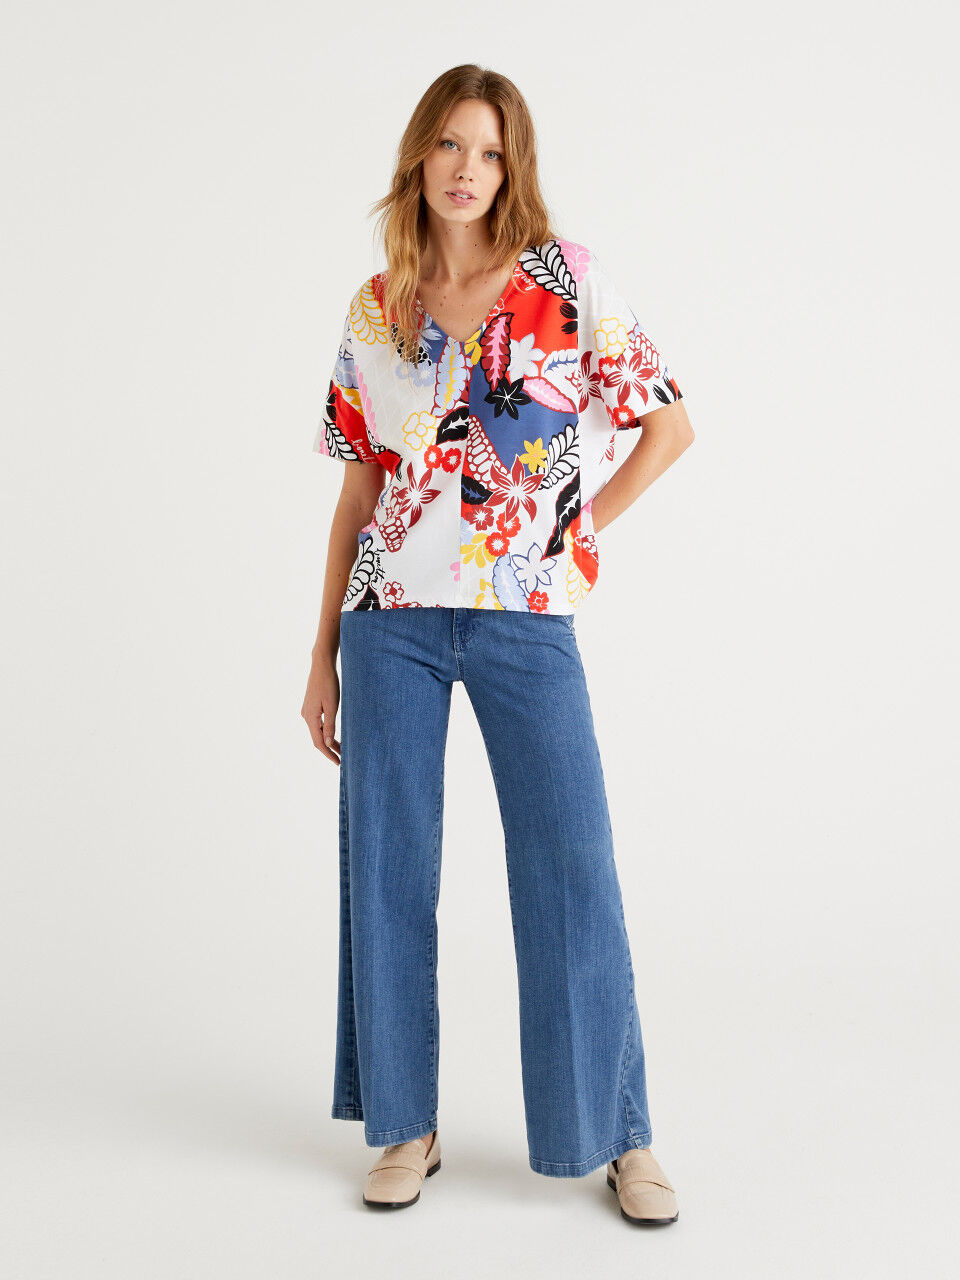 United colors of benetton blouse WOMEN FASHION Shirts & T-shirts Sequin Beige L discount 73% 